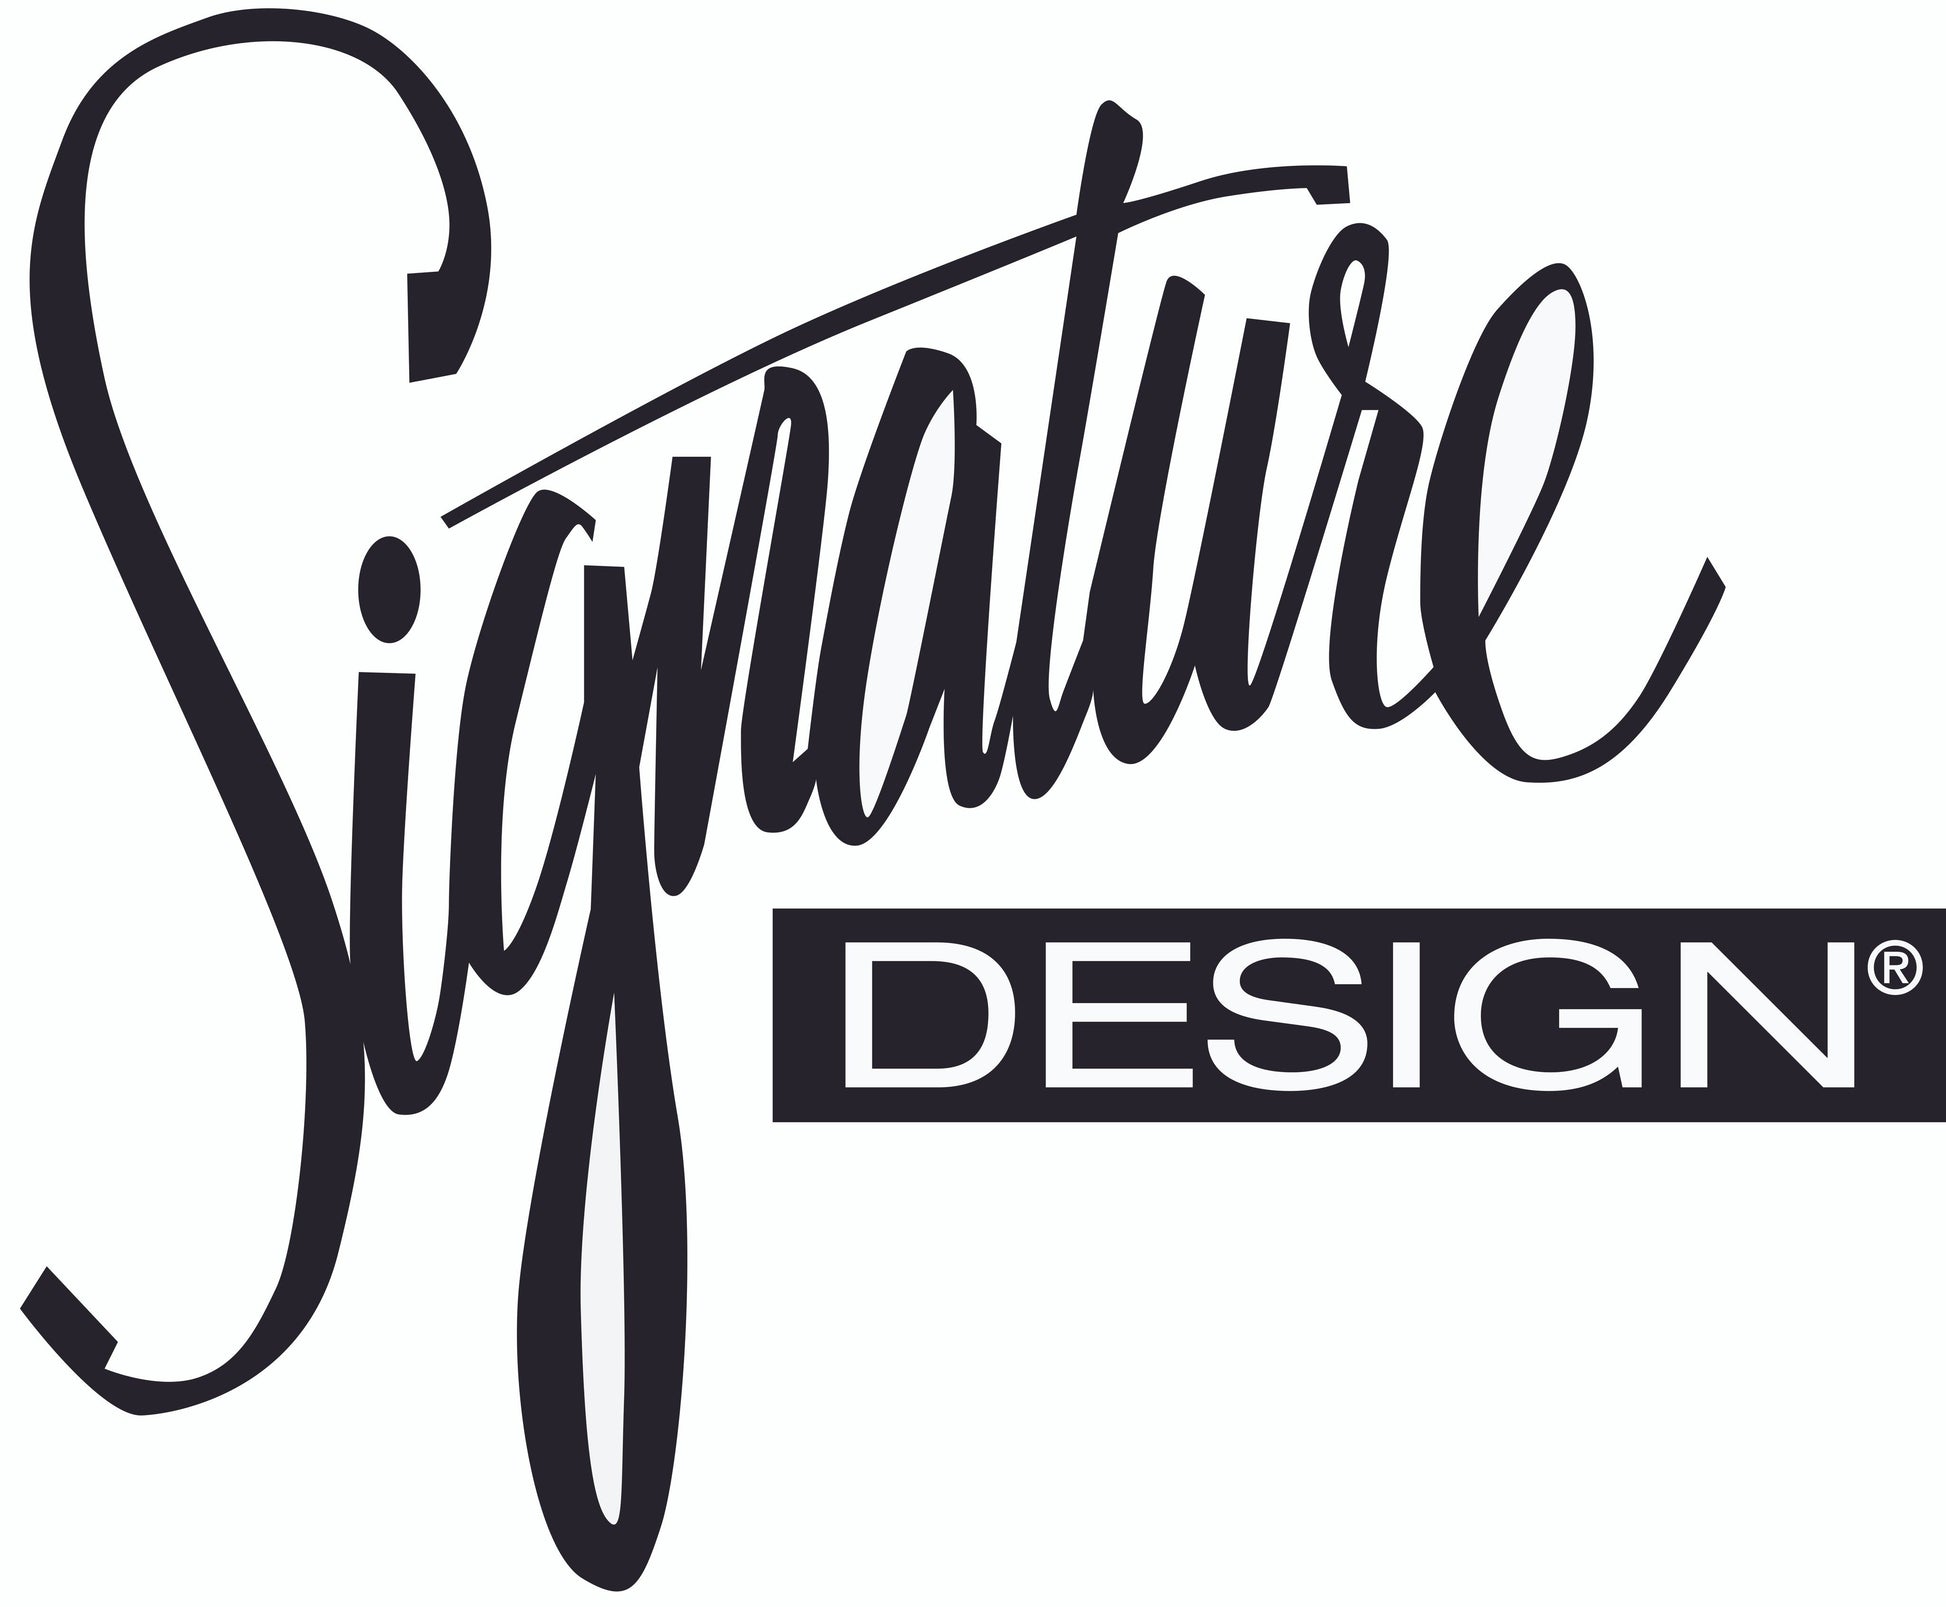 Trasimeno Sofa, Loveseat and Recliner Signature Design by Ashley®